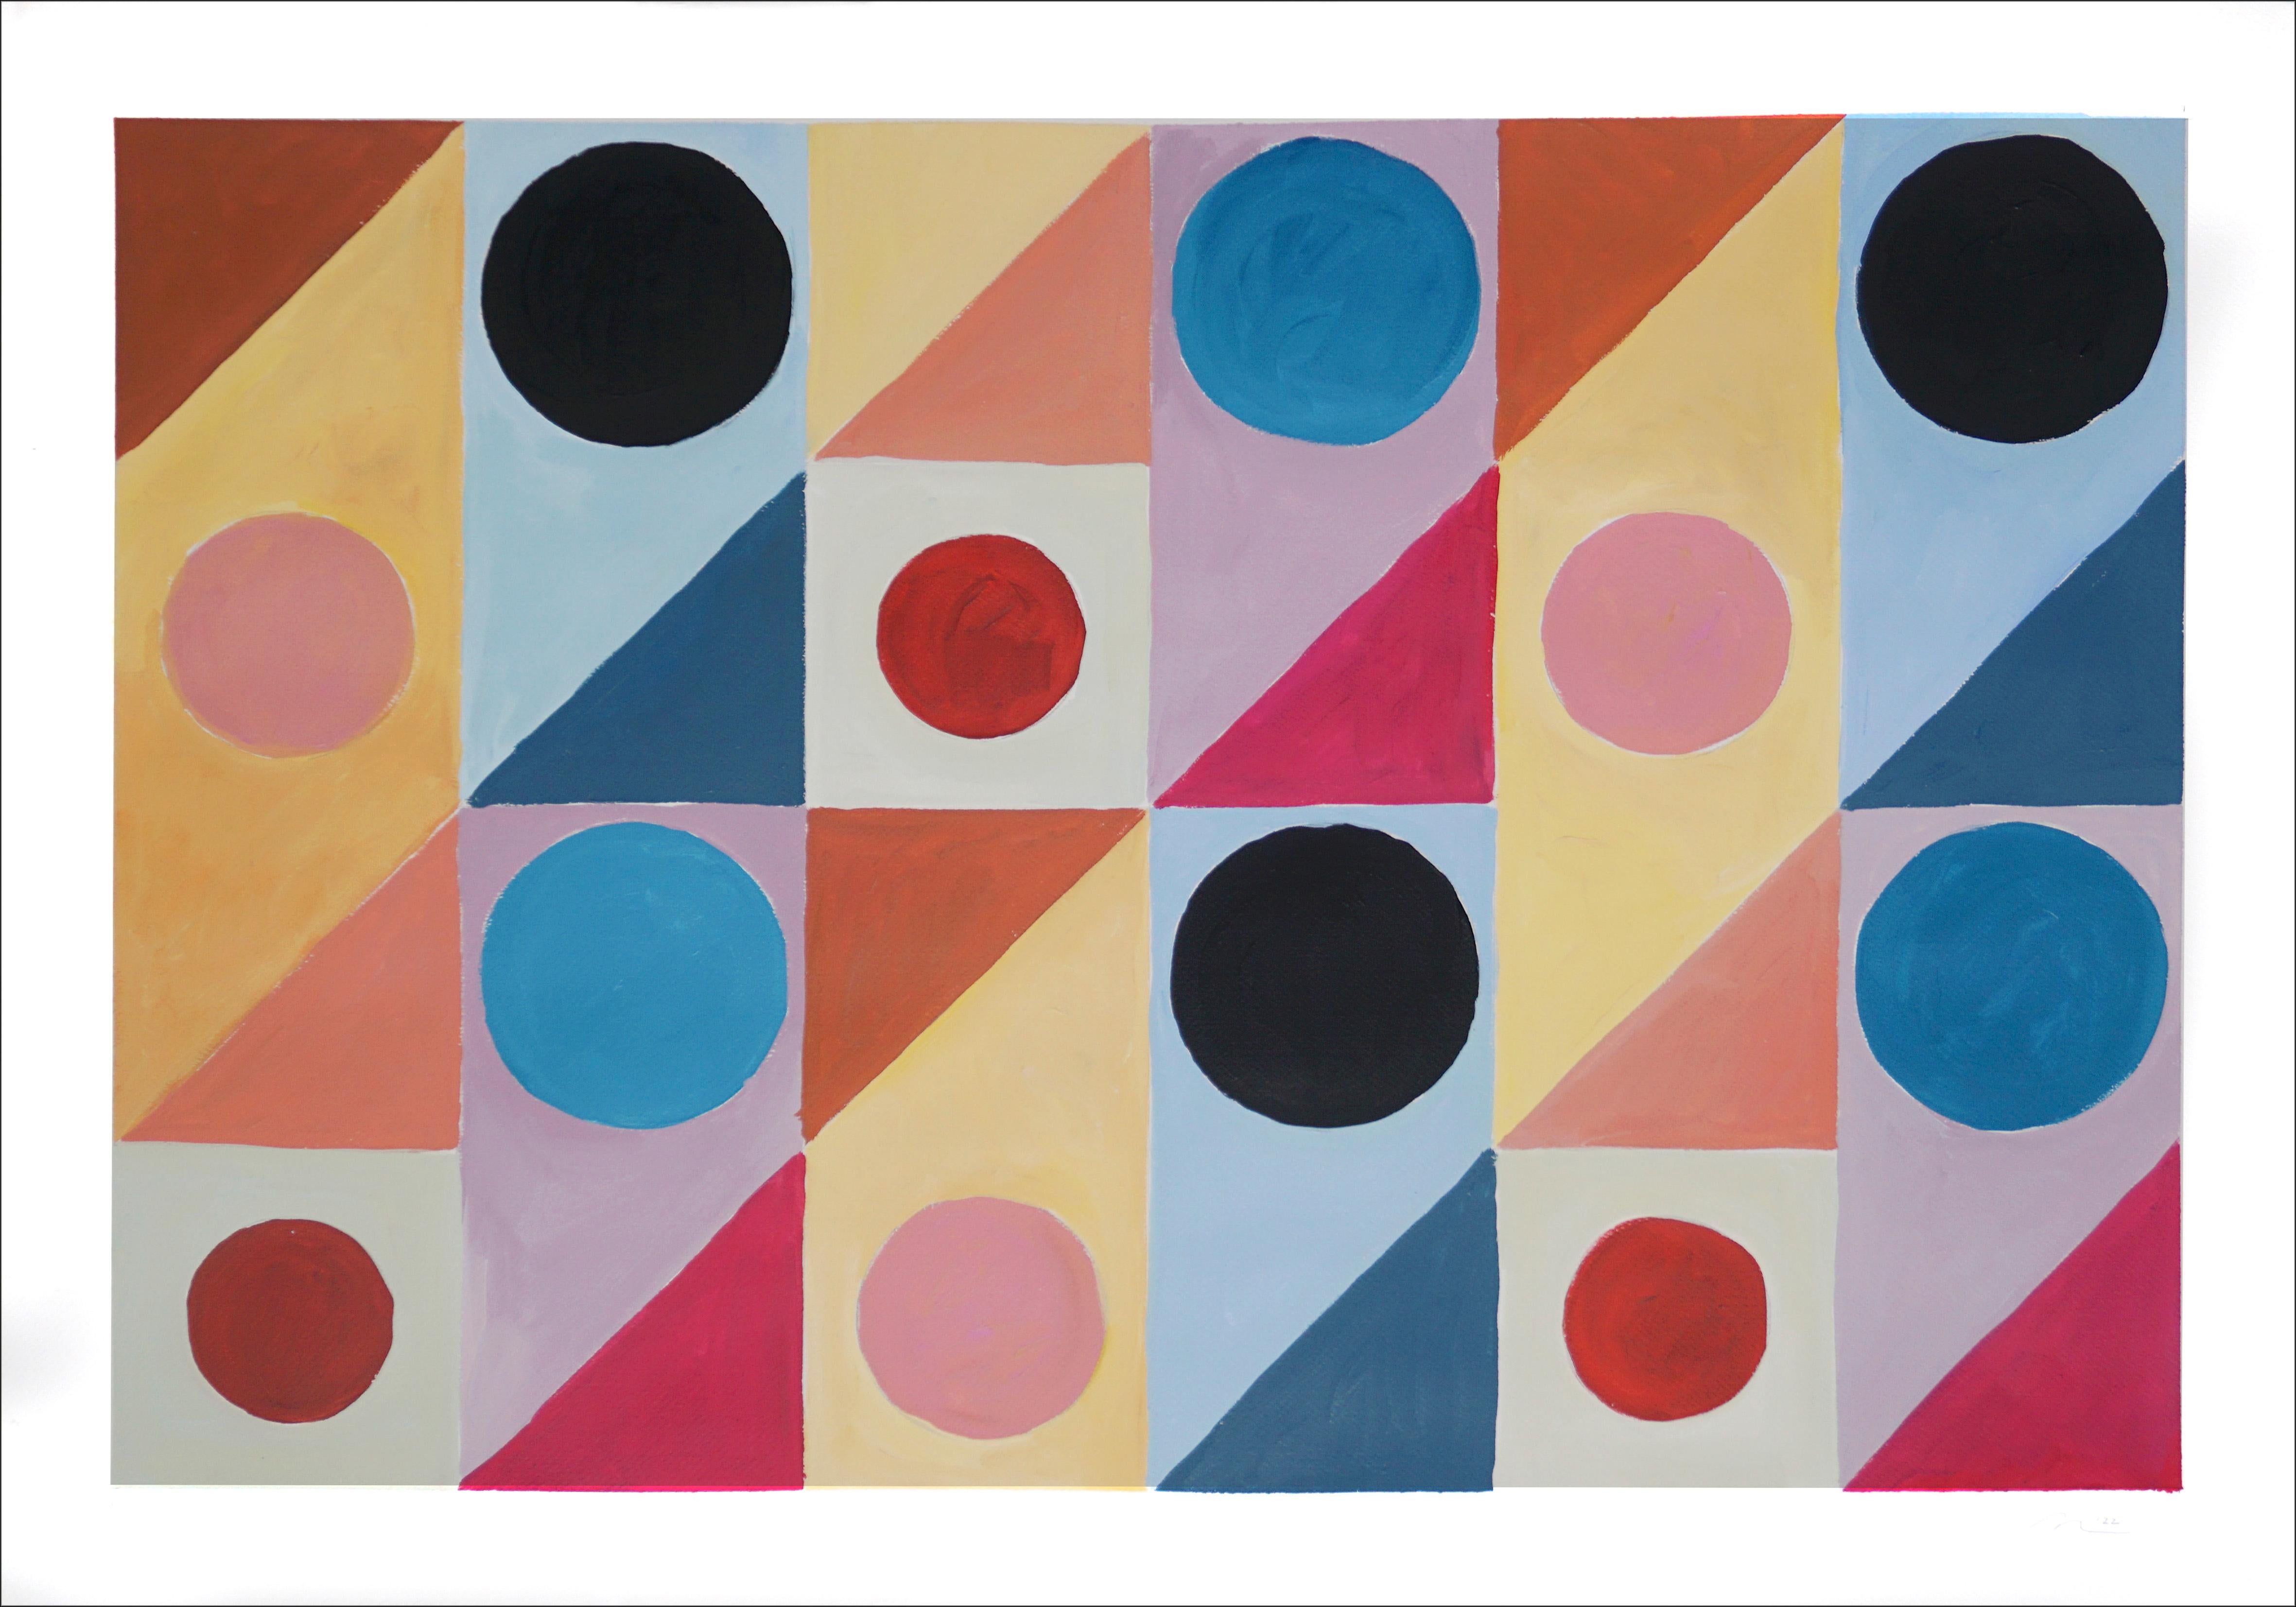 Mid-Tone Diagonal Transparency, Geometric Patchwork, Pink, Purple, Black Circles